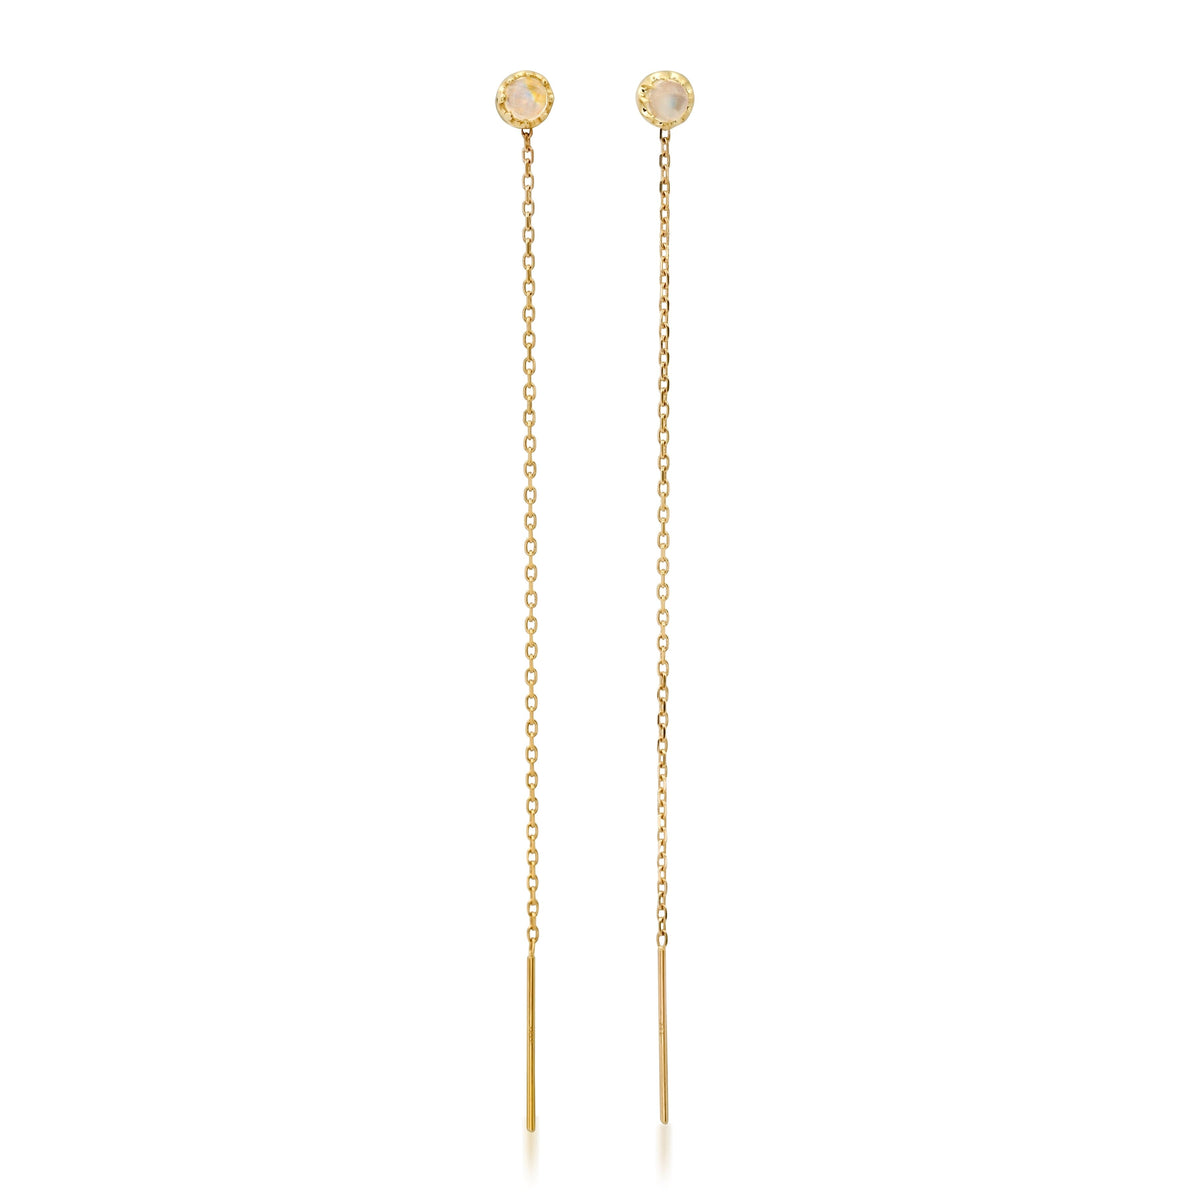 Rainbow Moonstone Diana Threaders - 14k yellow gold | Fine Collection earrings Amanda K Lockrow